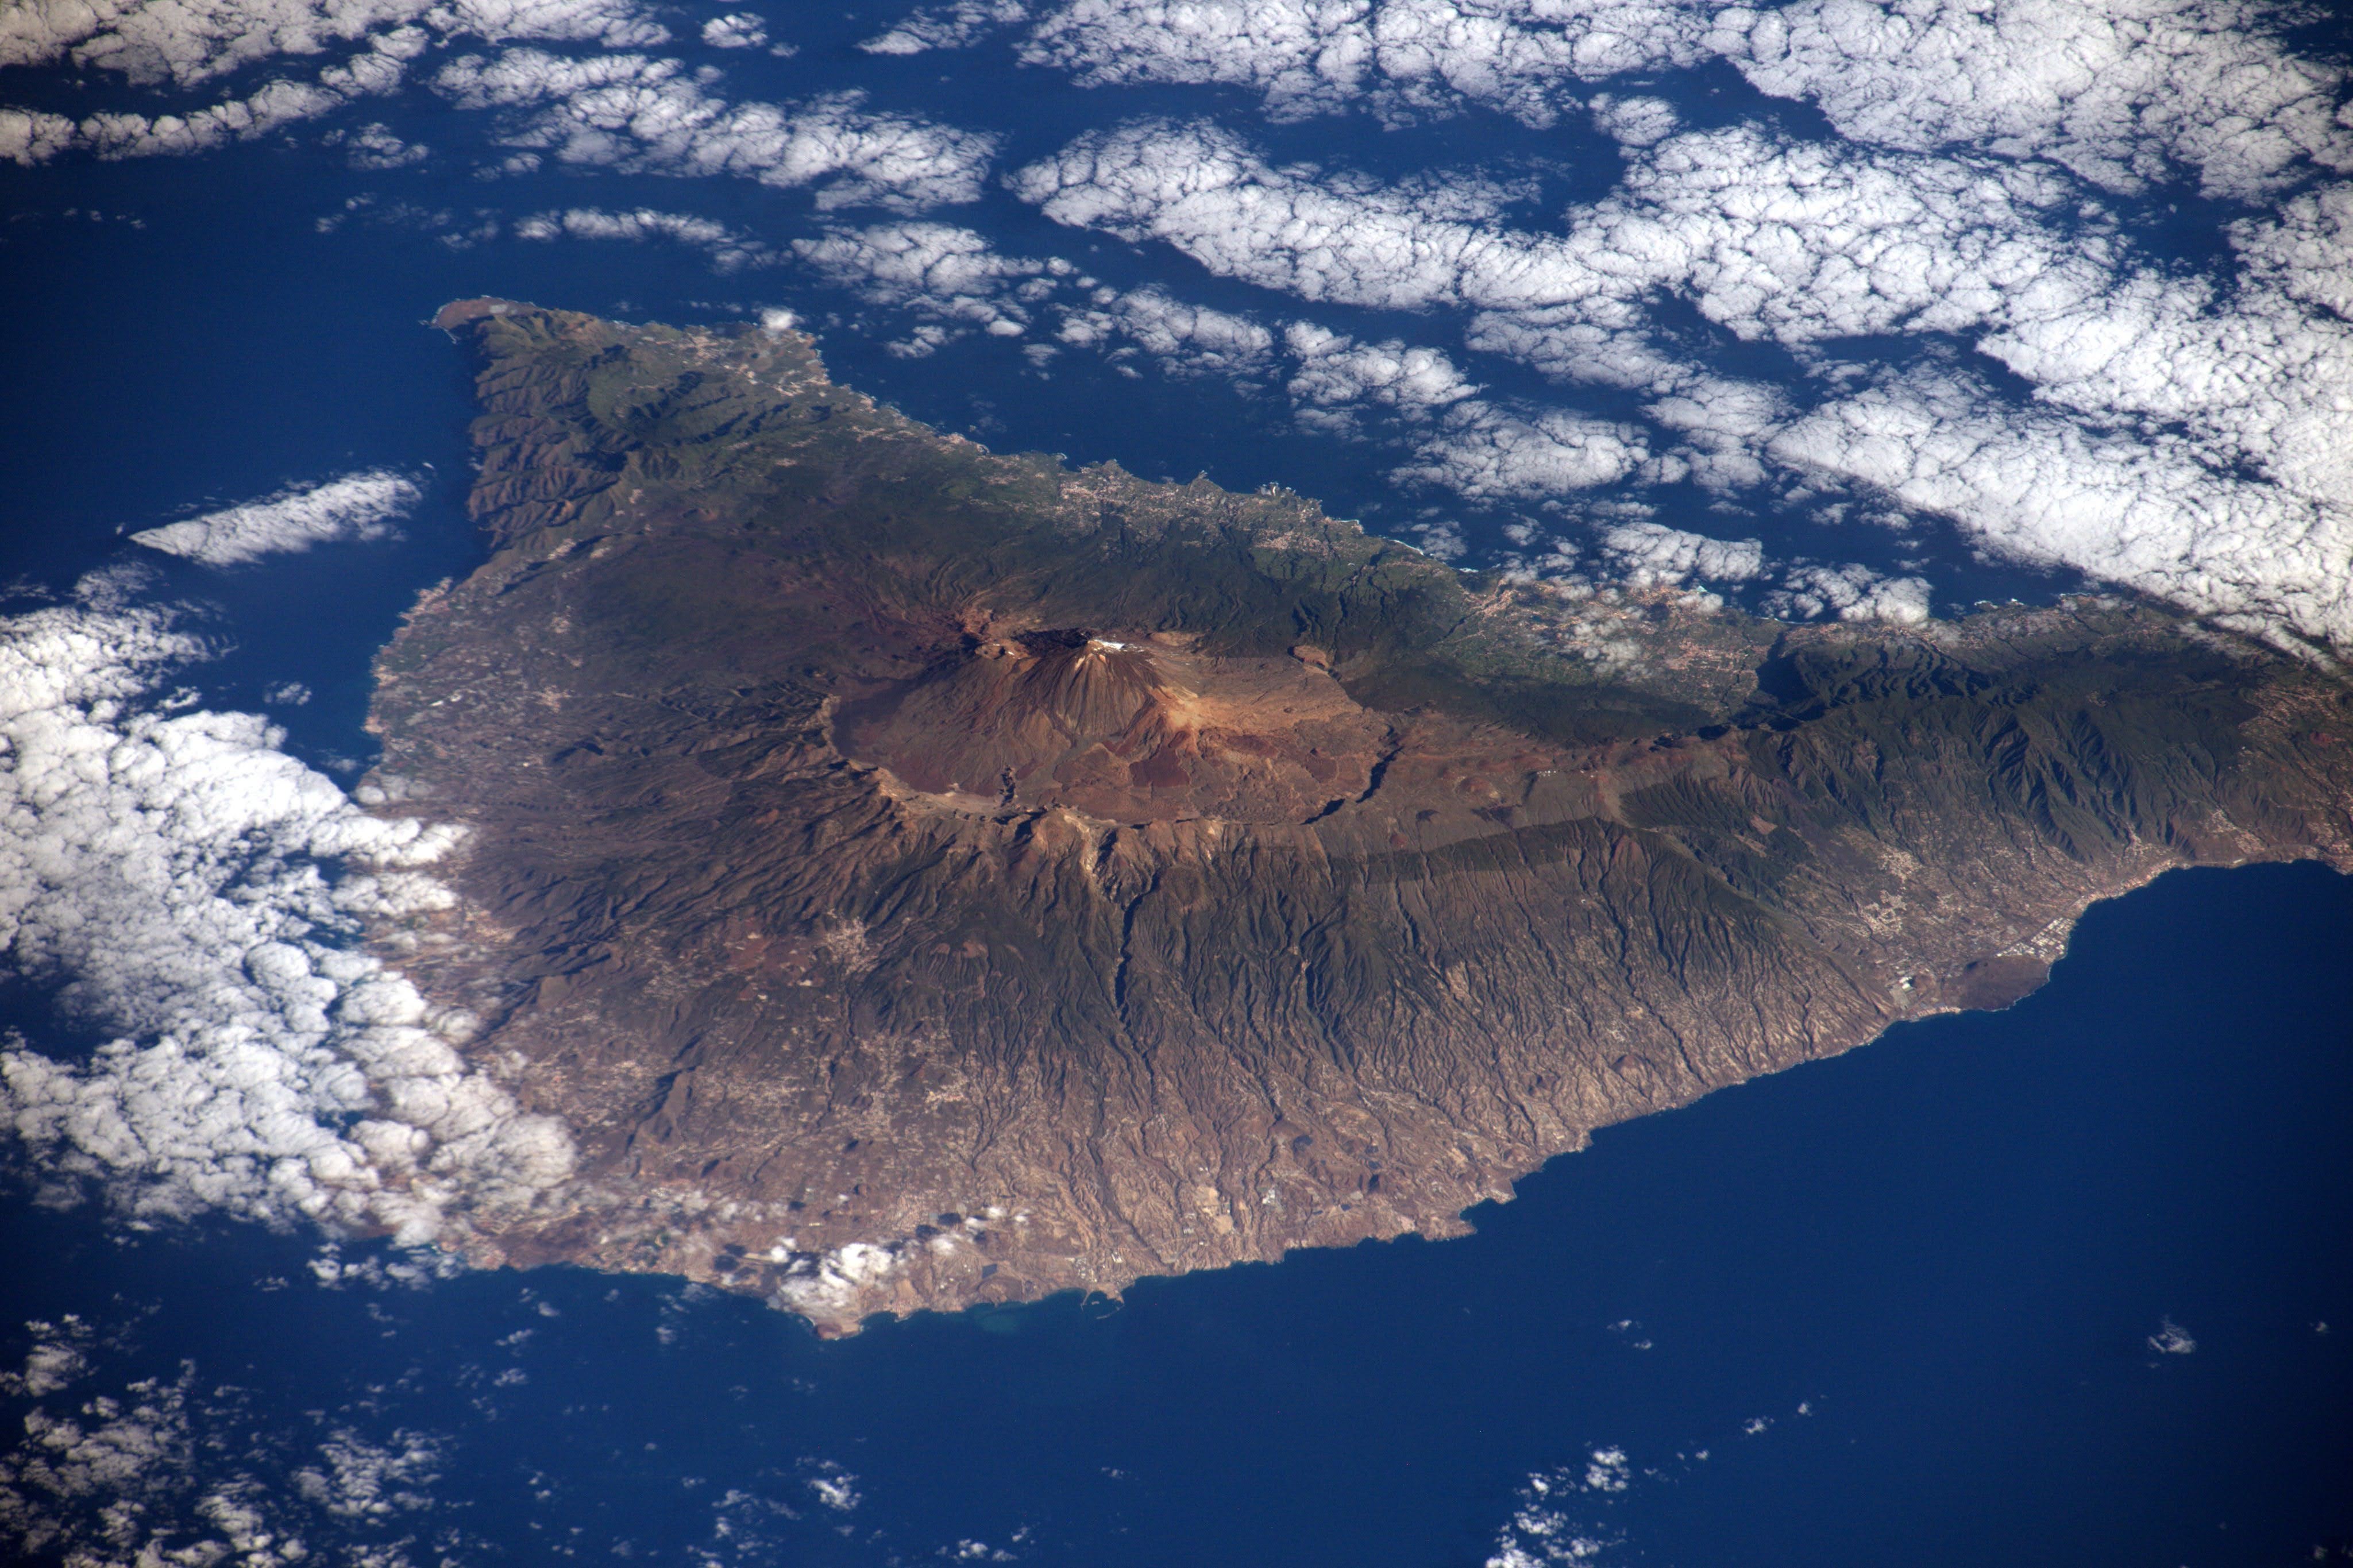 Tenerife aerial view